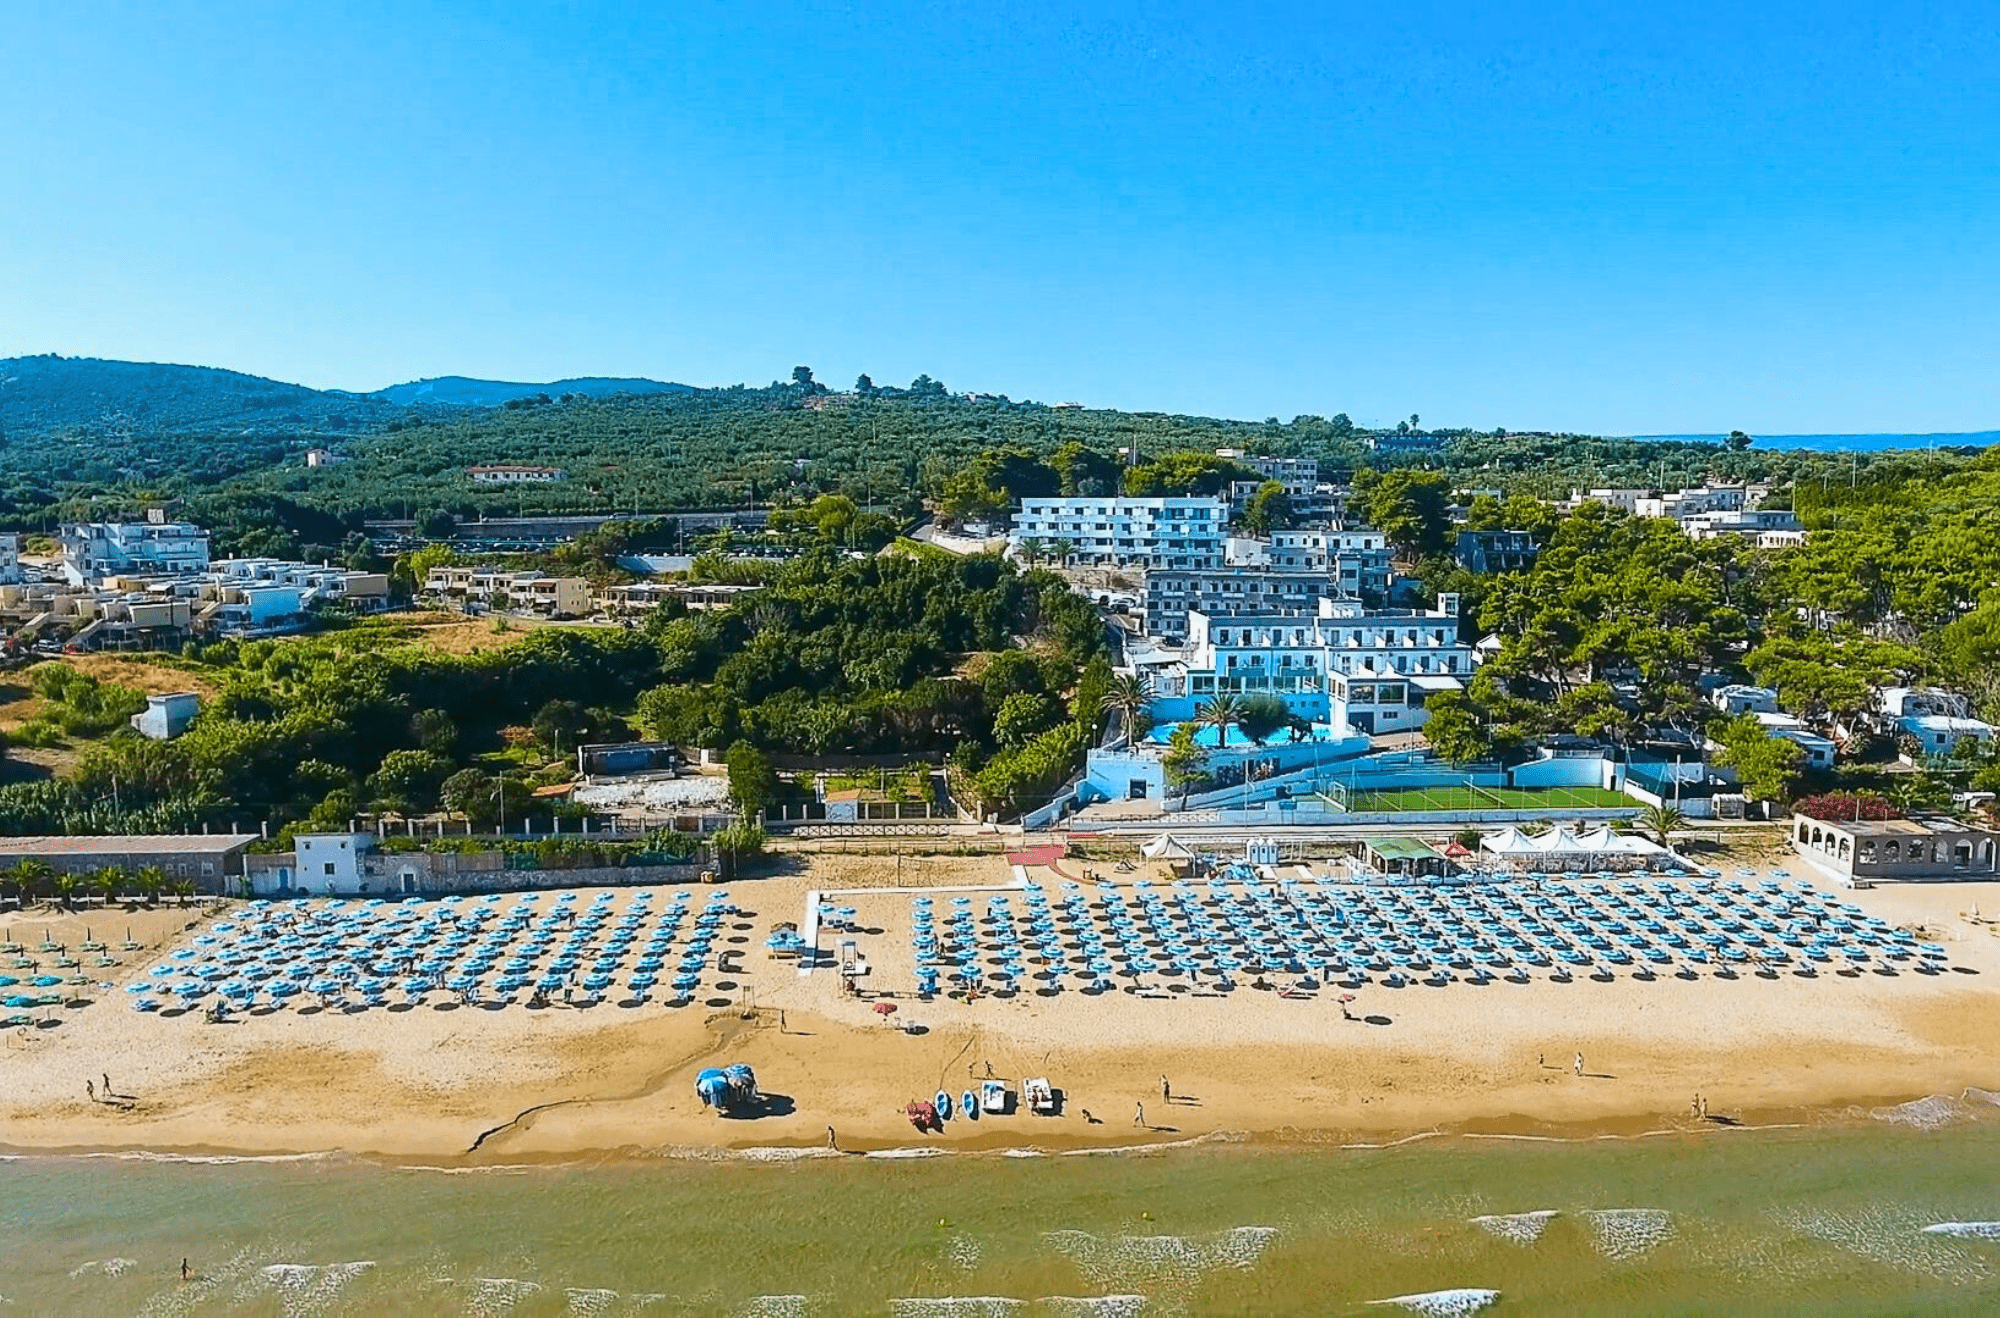 Hotel Baia Santa Barbara